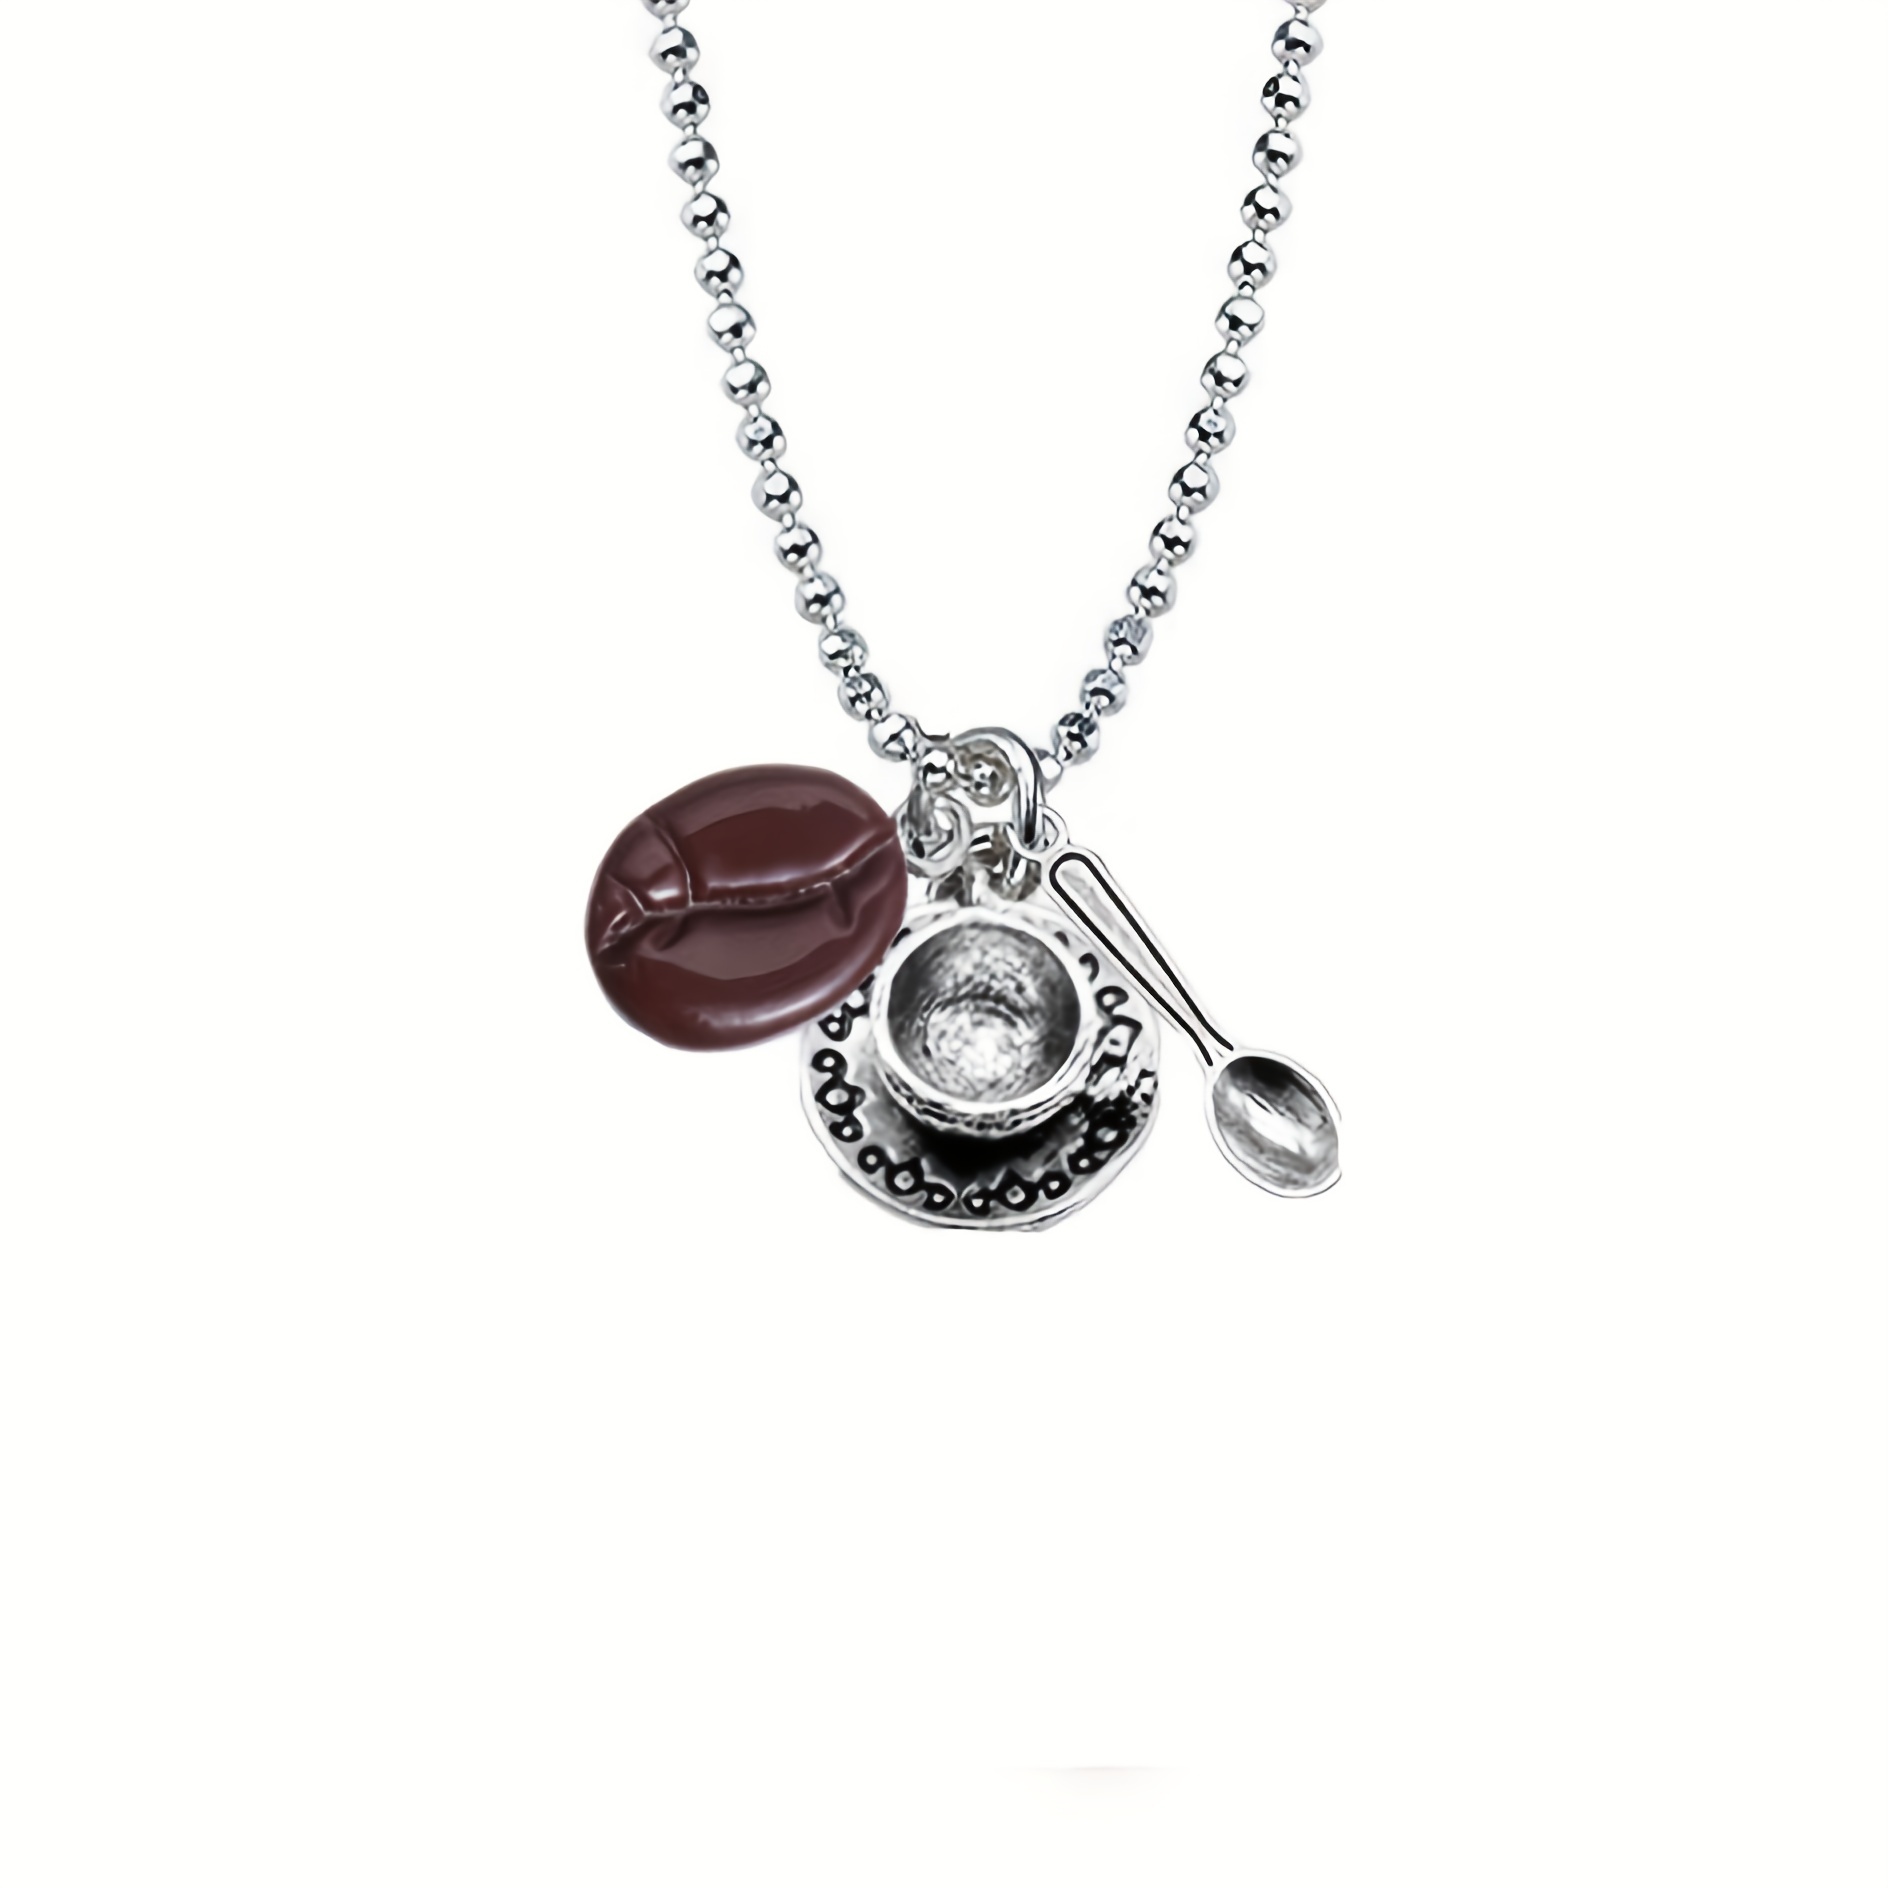 stash necklace with spoon Men Woman Capsule Pendant Necklace